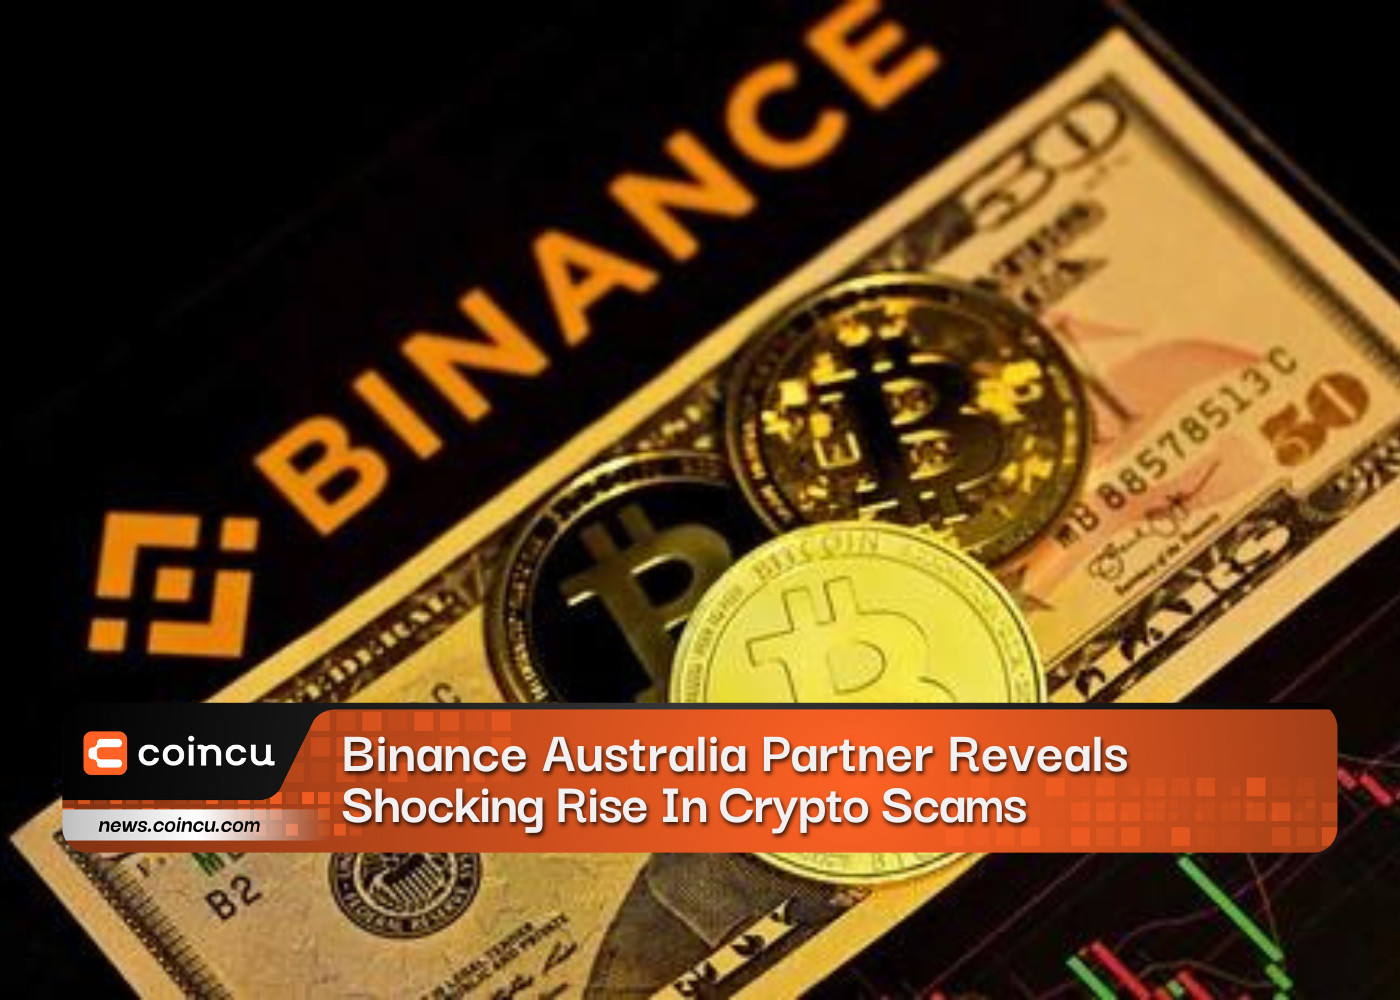 Binance Australia Partner Reveals